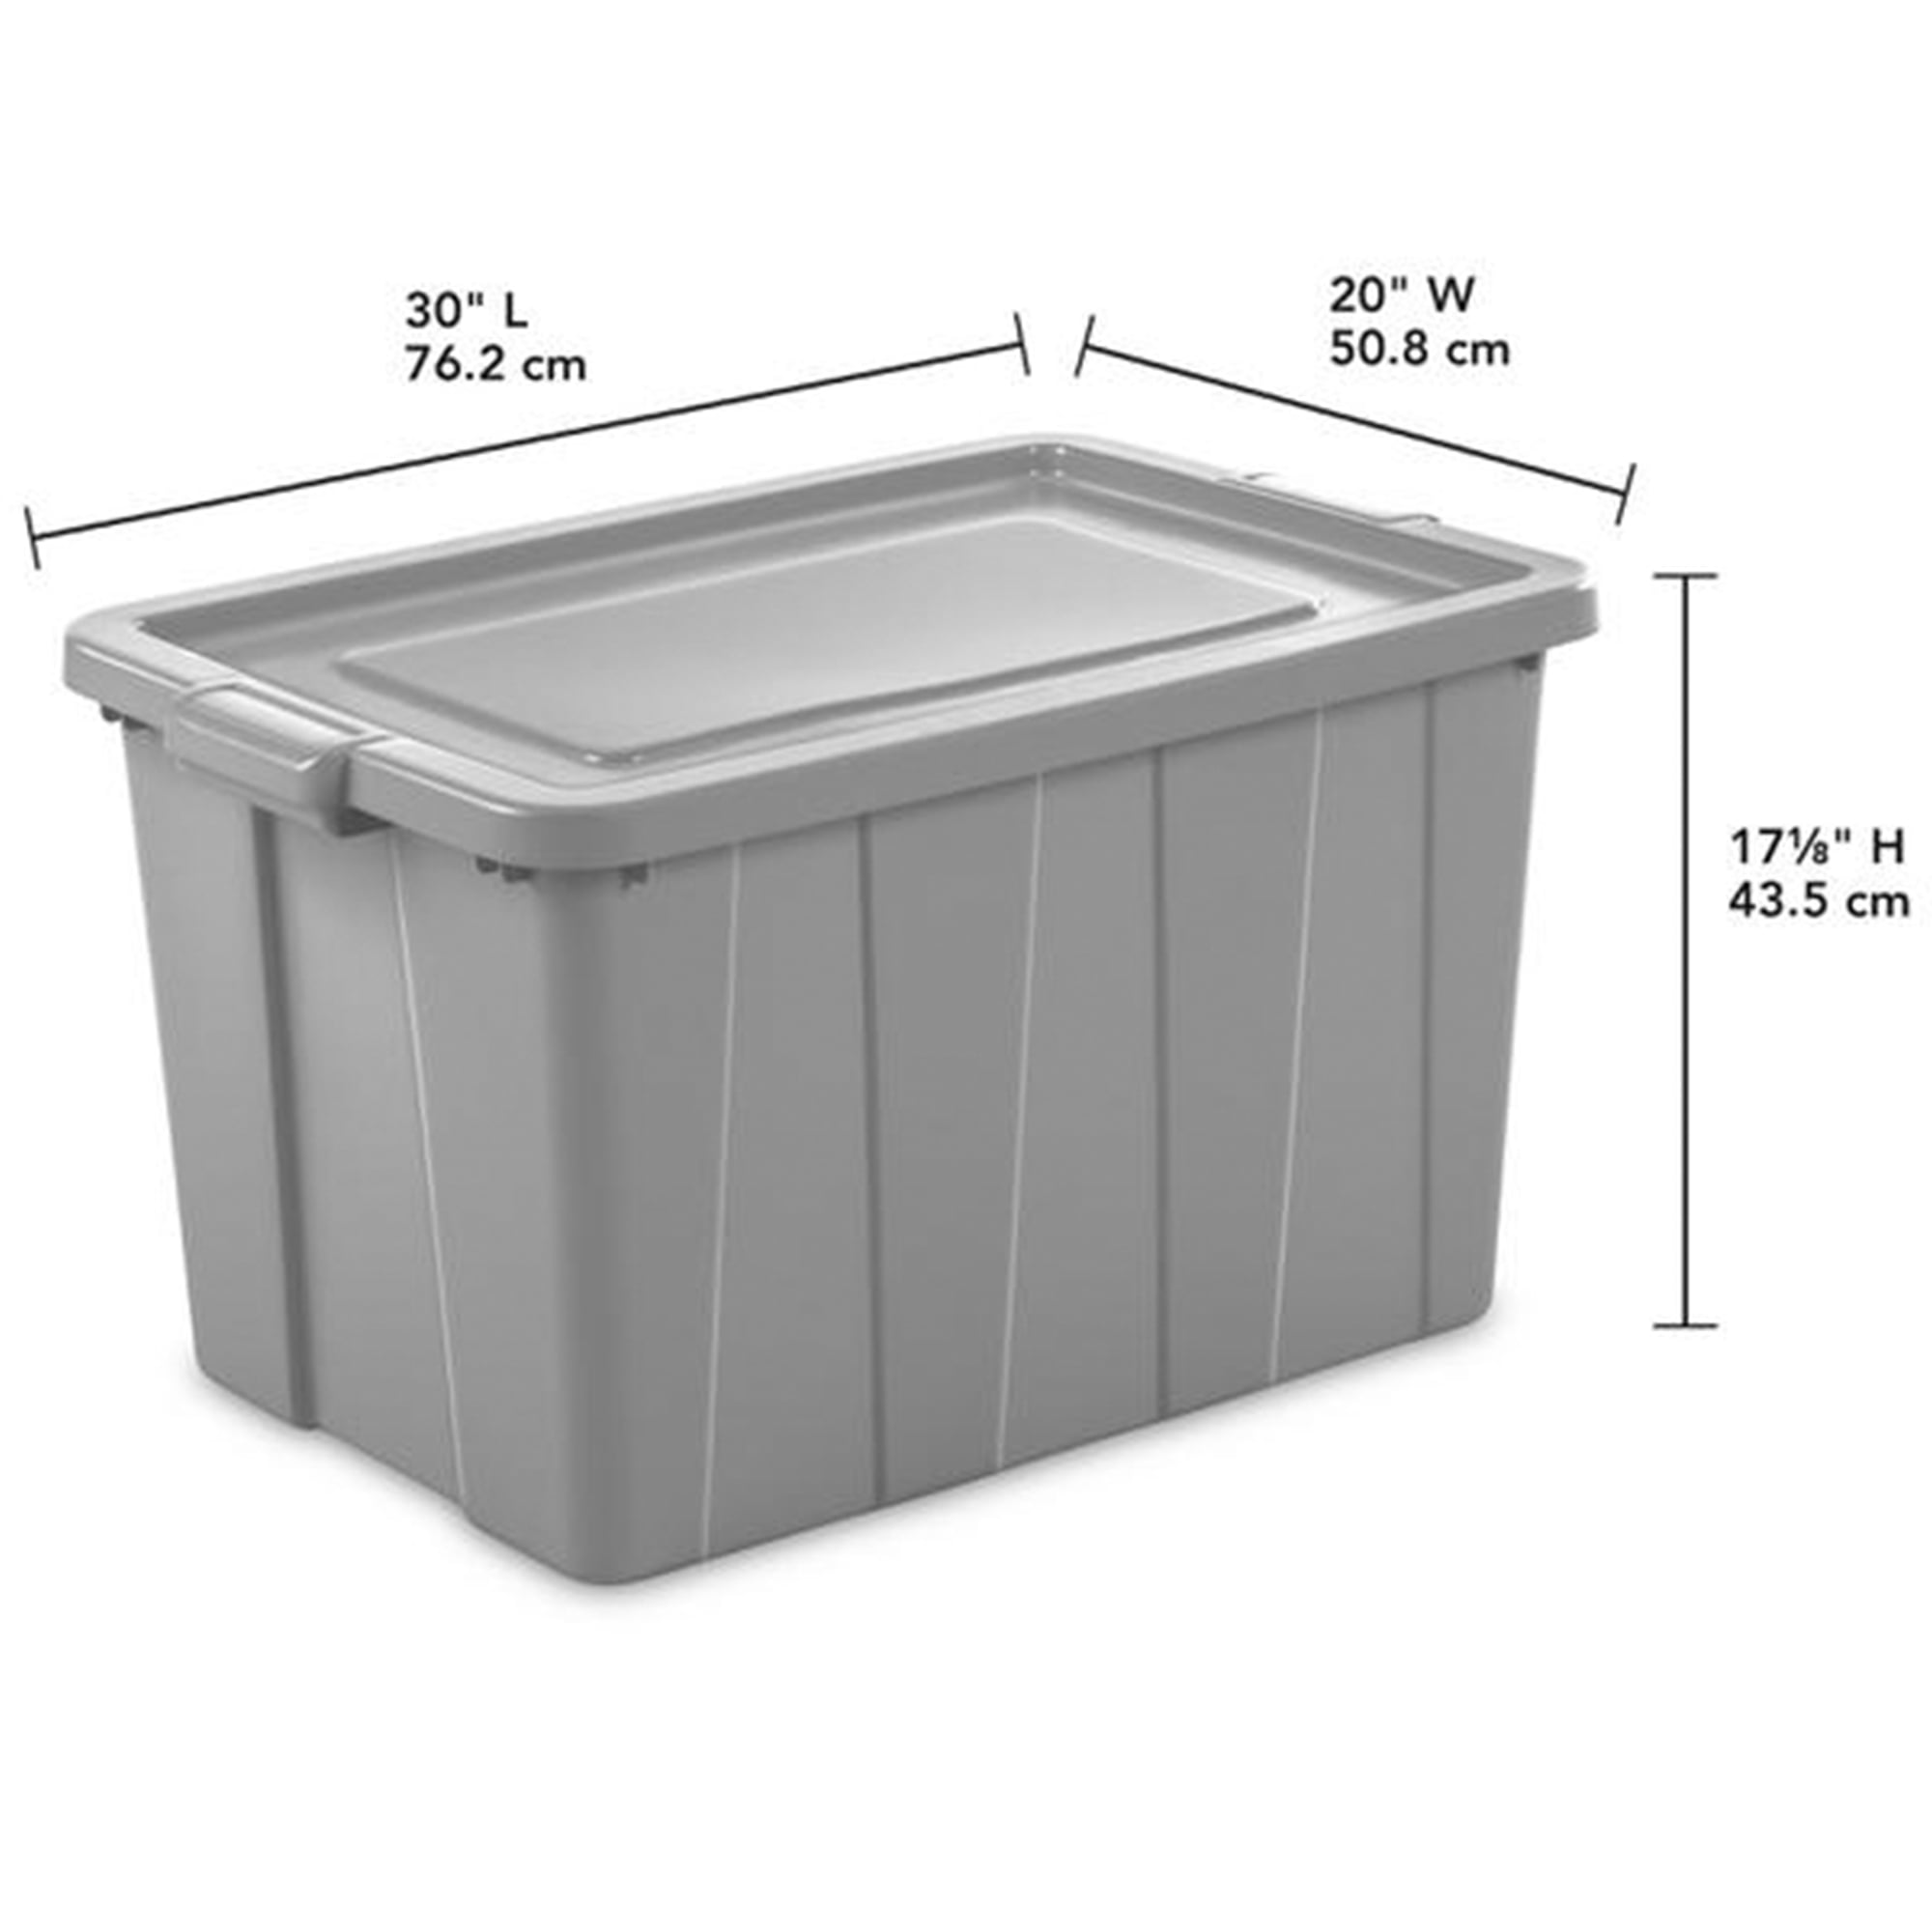 Sterilite Tuff1 30 Gal Plastic Storage Tote Container Bin w/ Lid (8 Pack) - 1